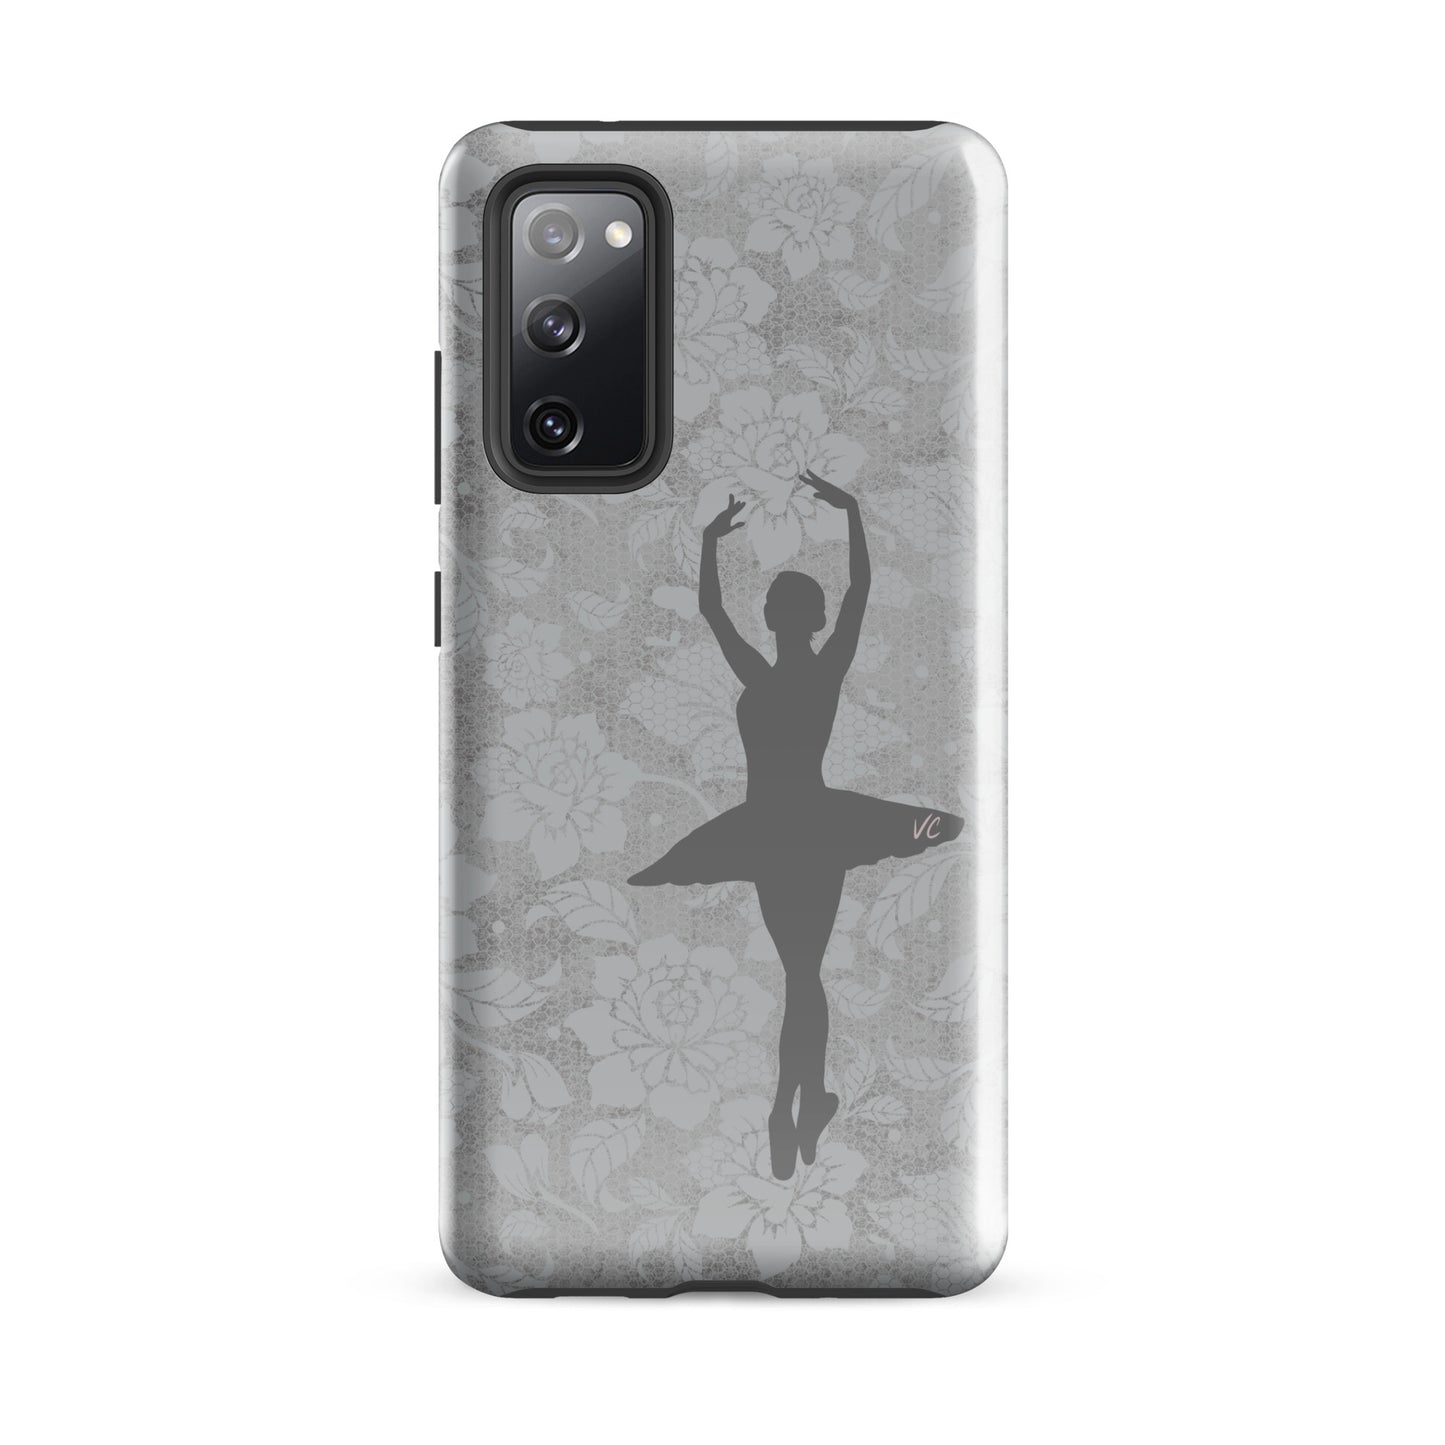 Monochrome Silhouette | Balletcore Collection | Tough case